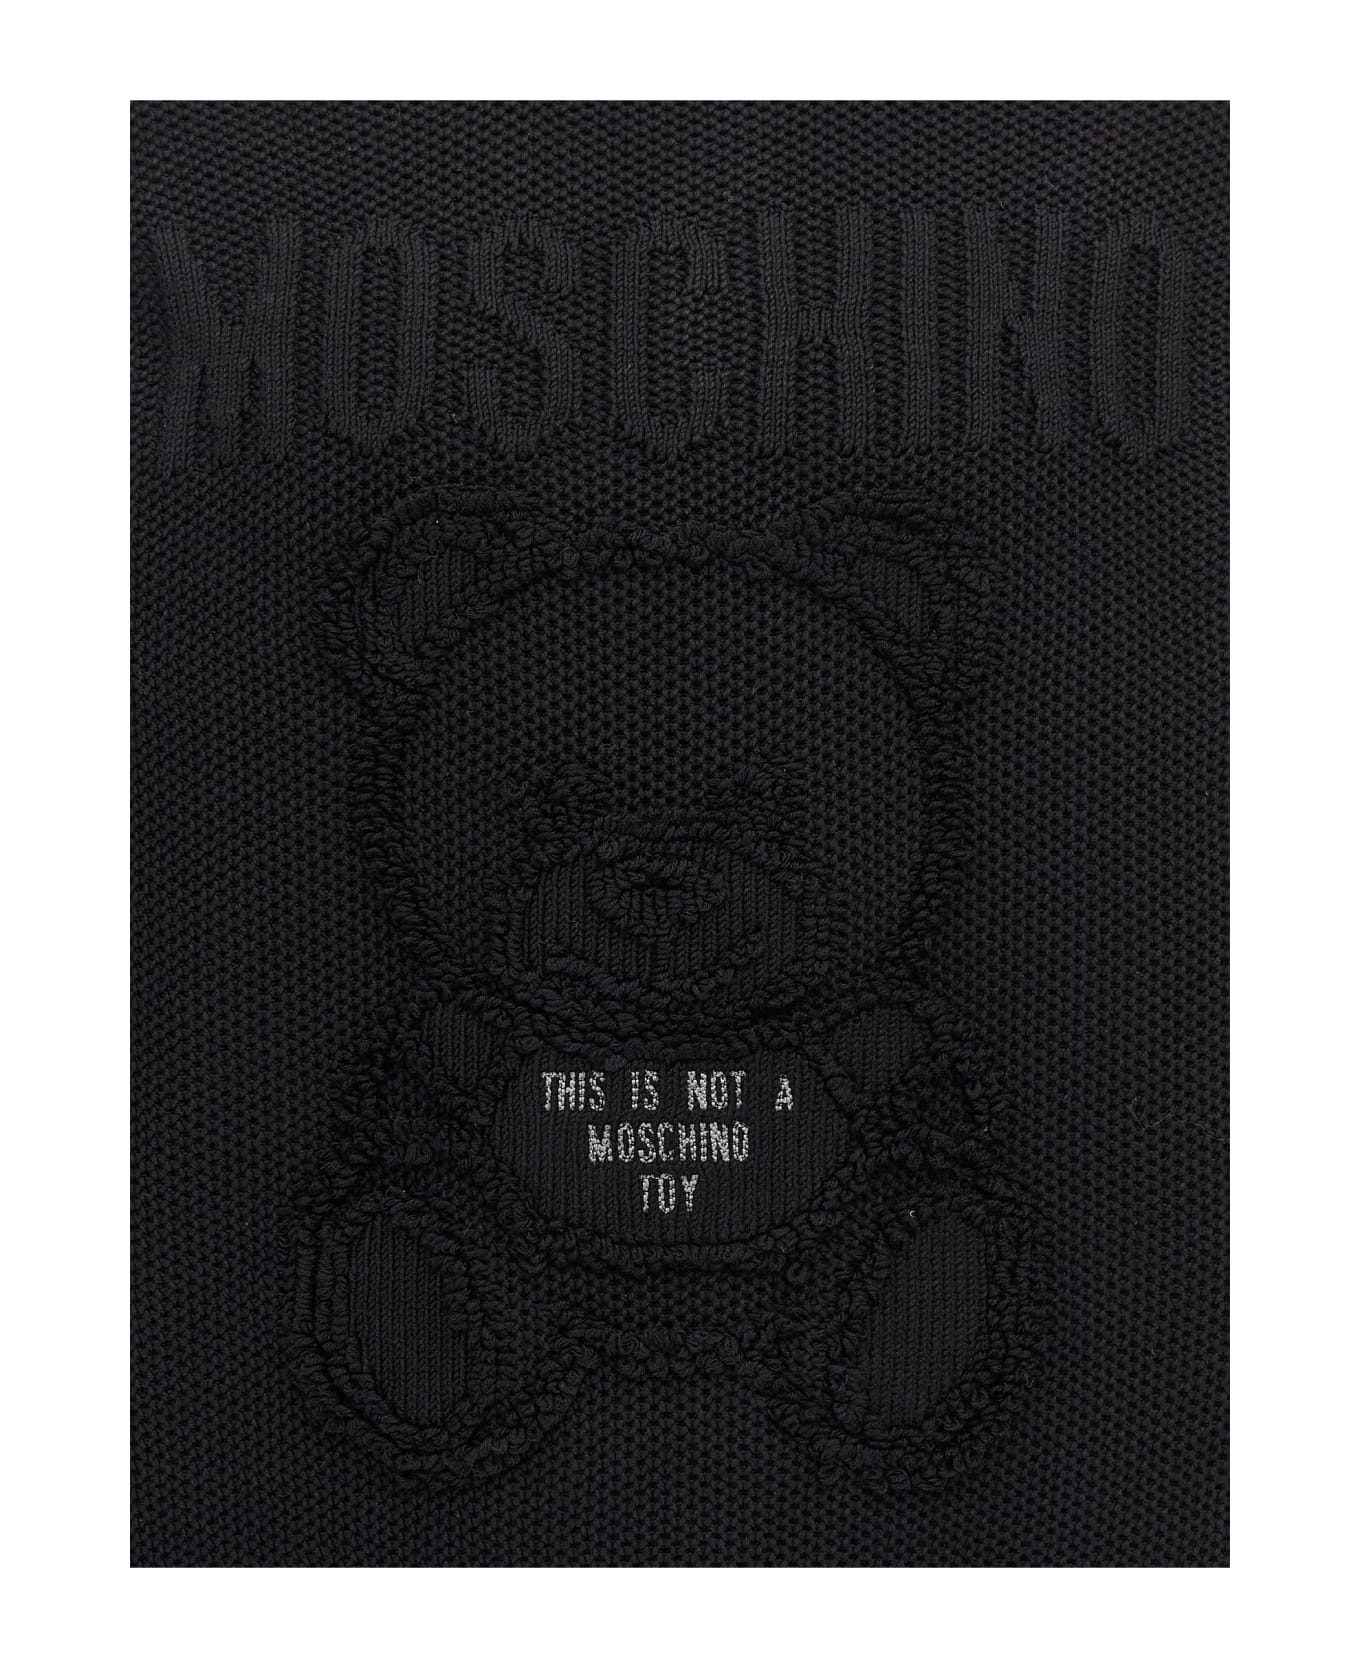 Moschino 'teddy' Sweater - Black  